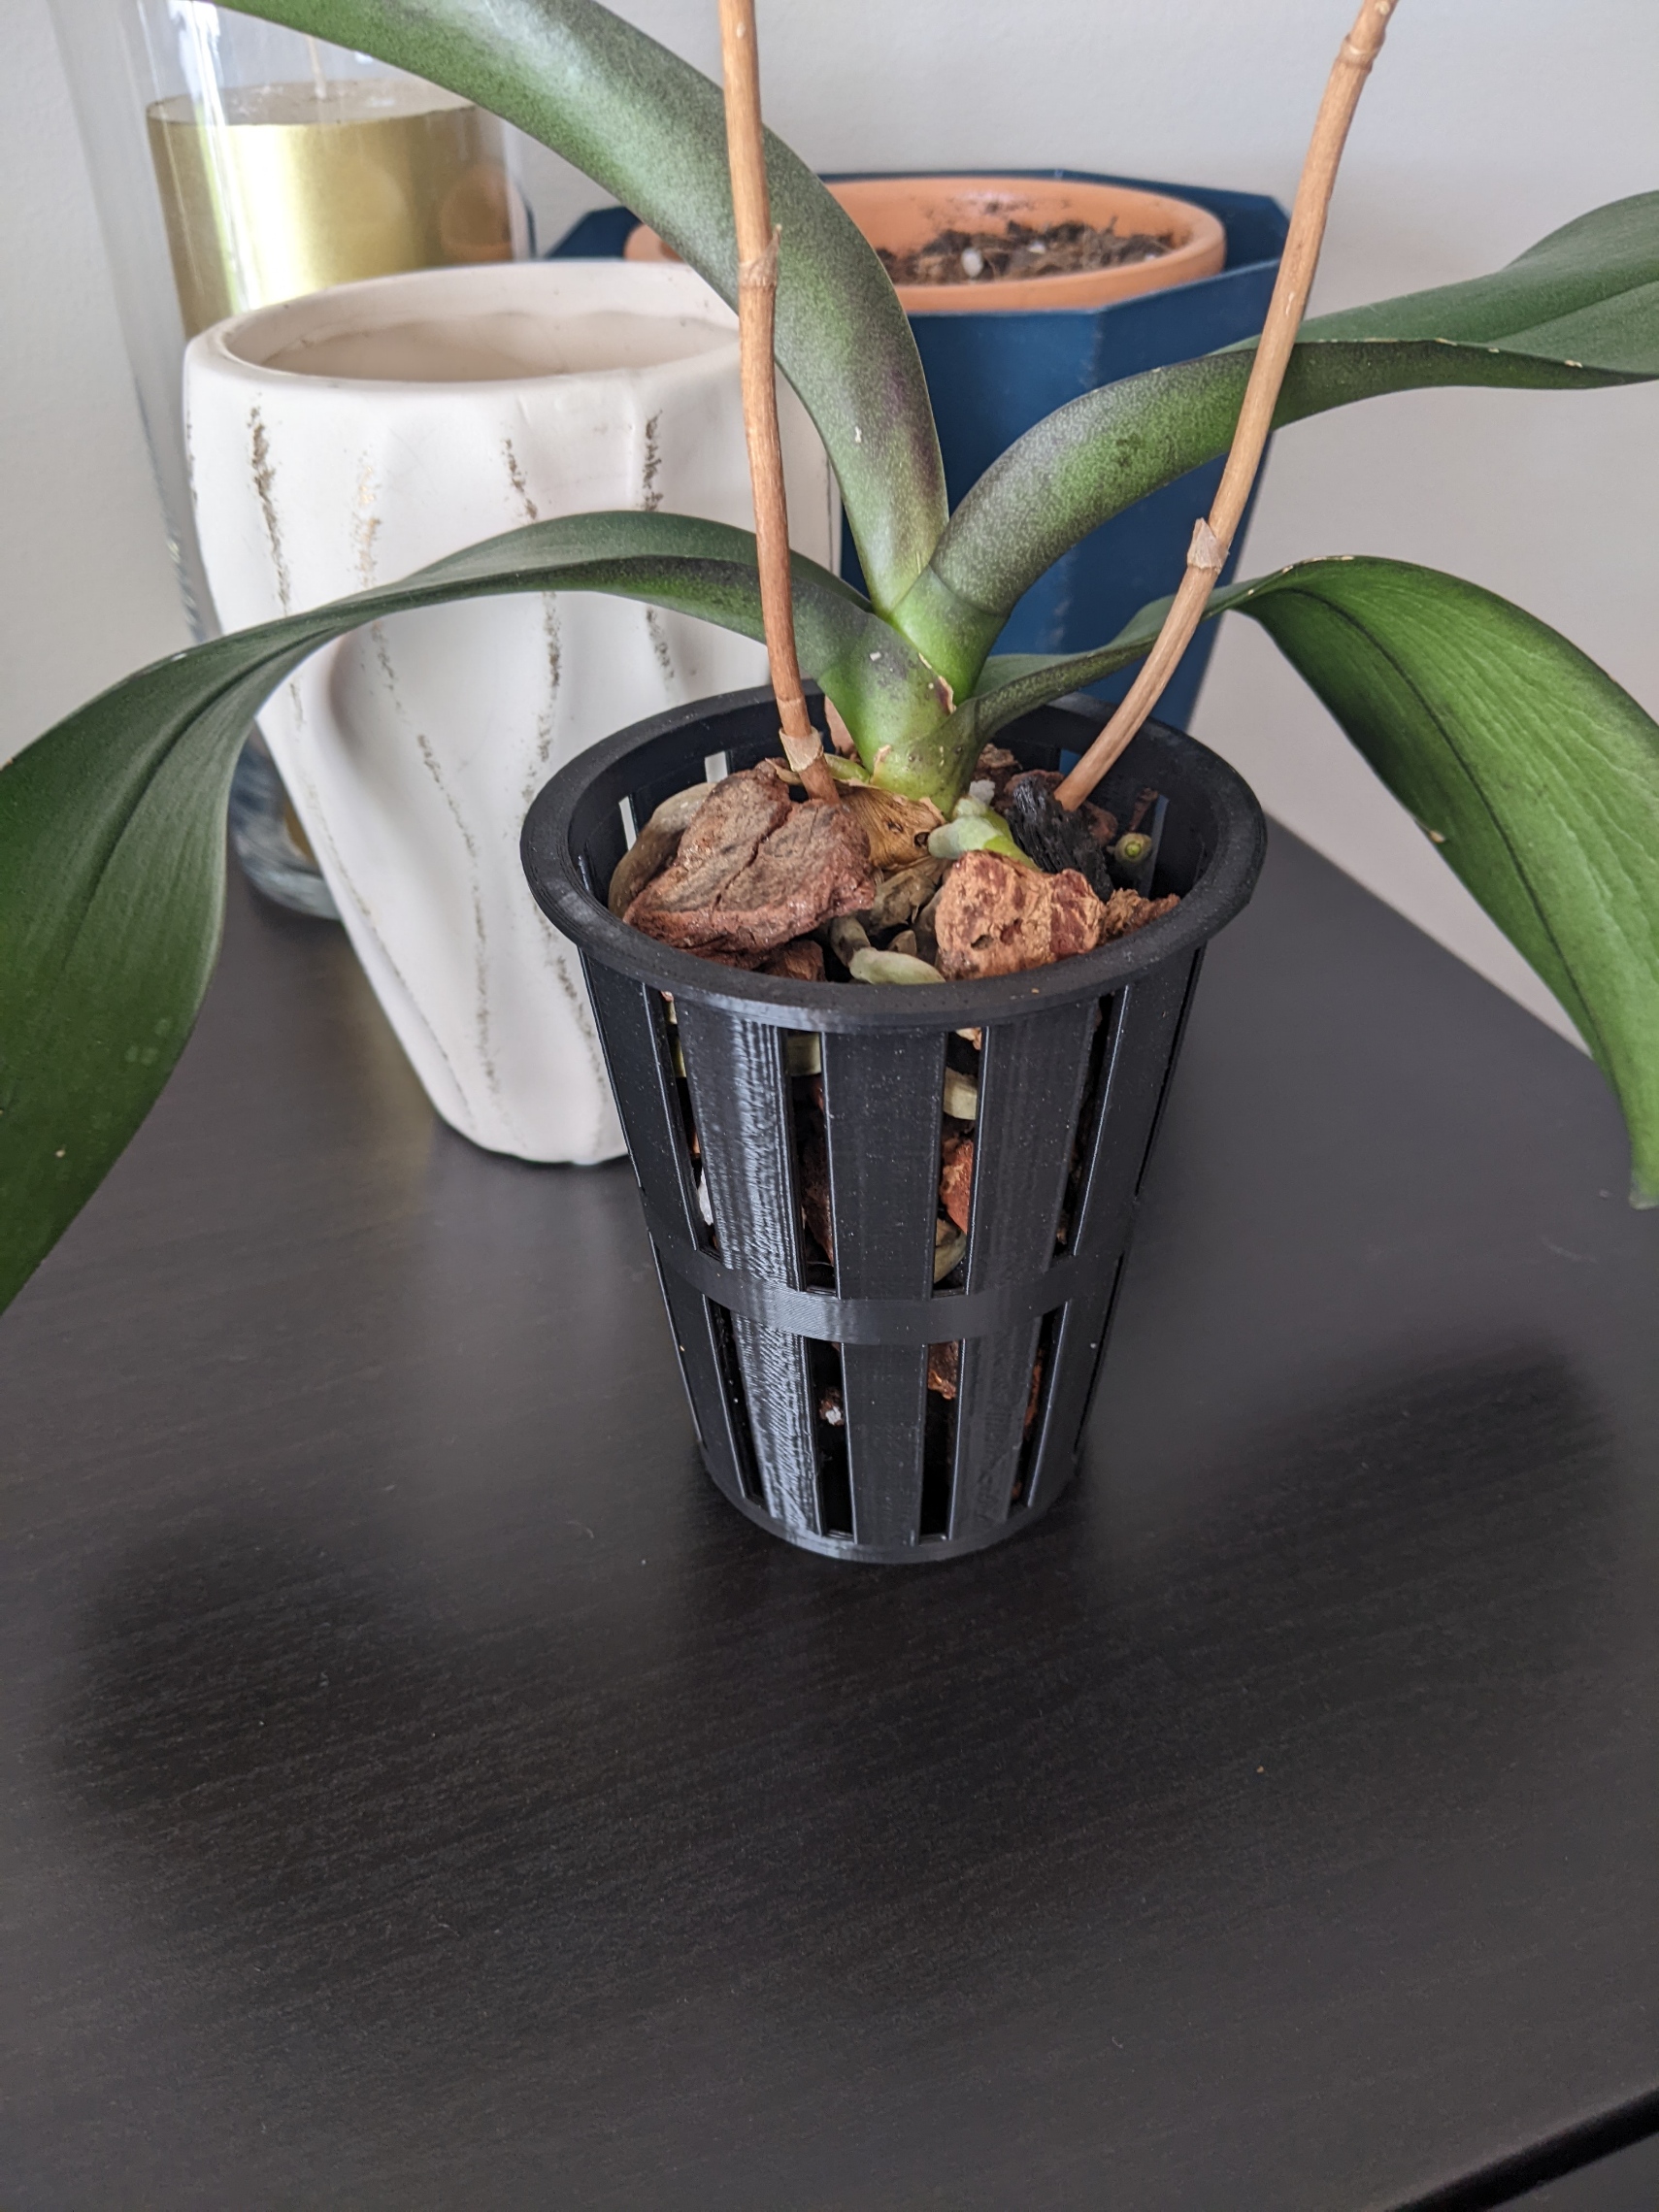 Orchid Basket